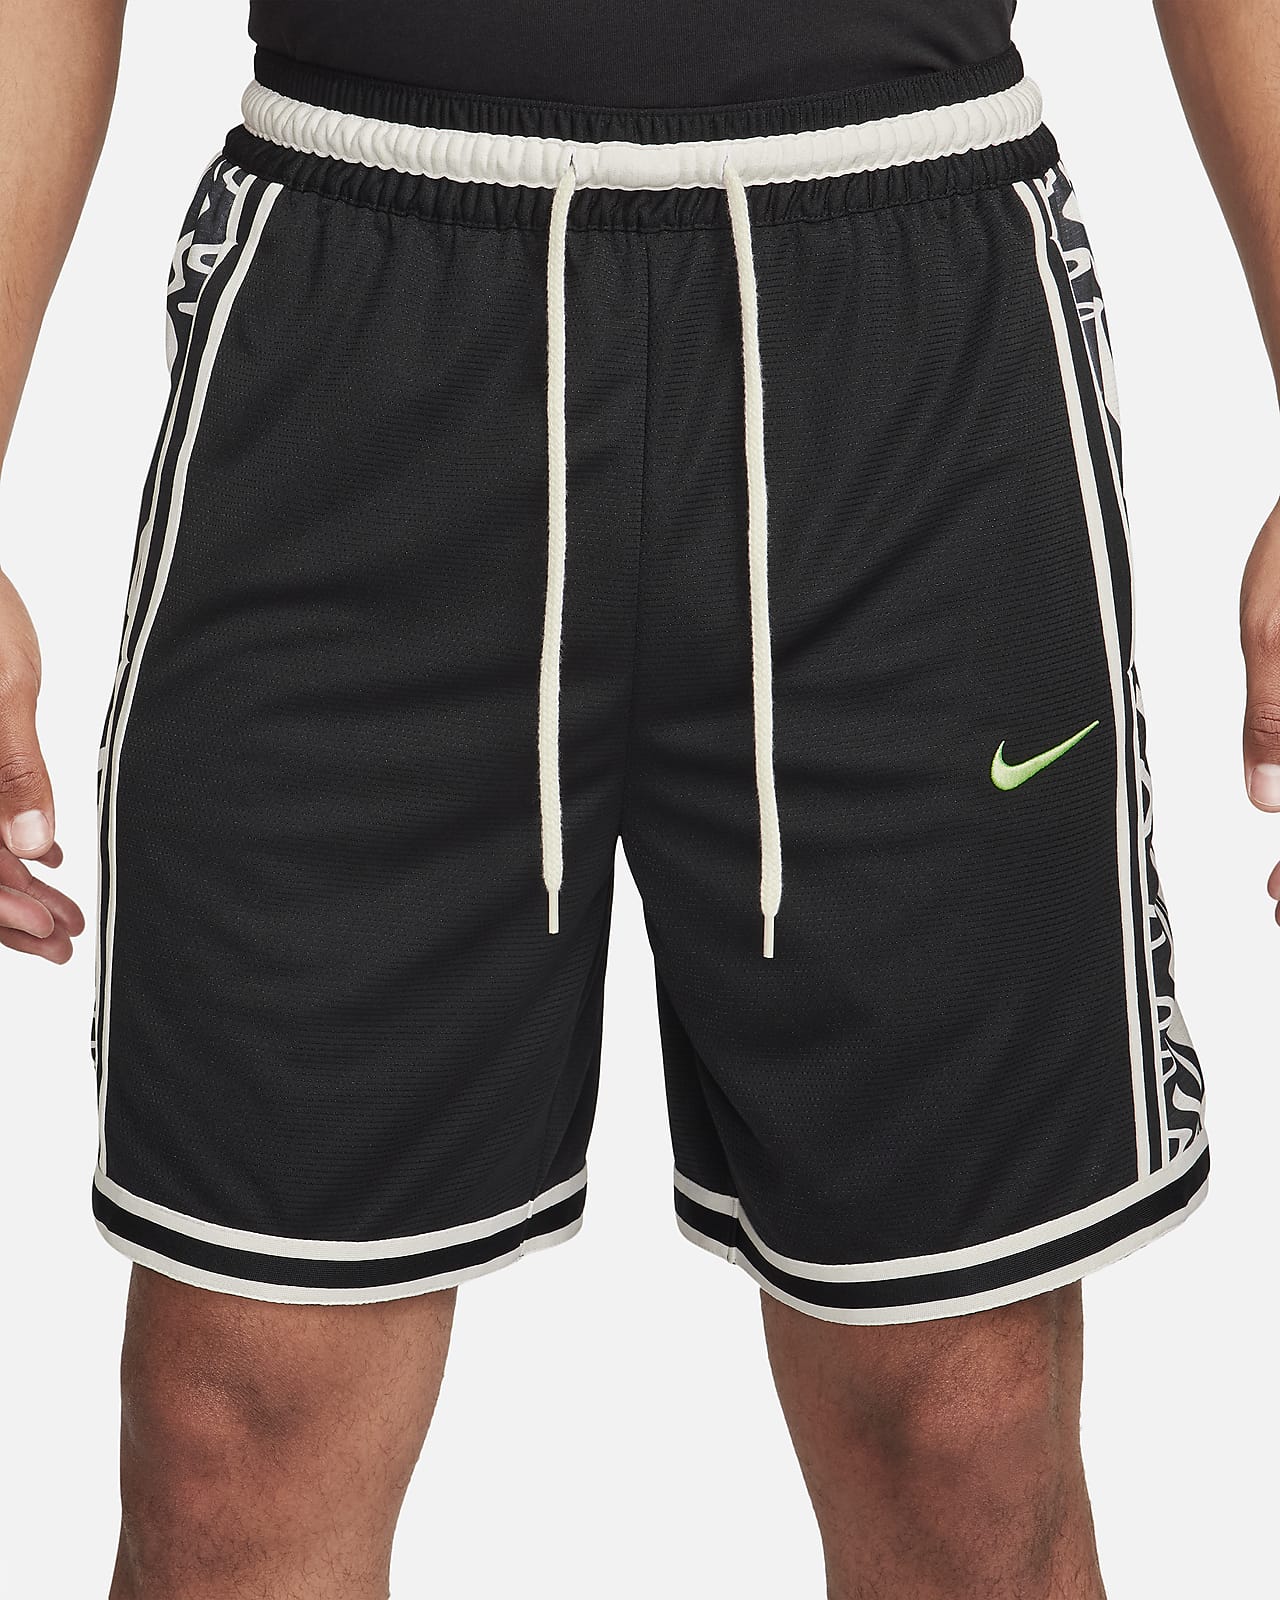 Nike Men's Basketball DNA Shorts Loose Fit Dri-FIT